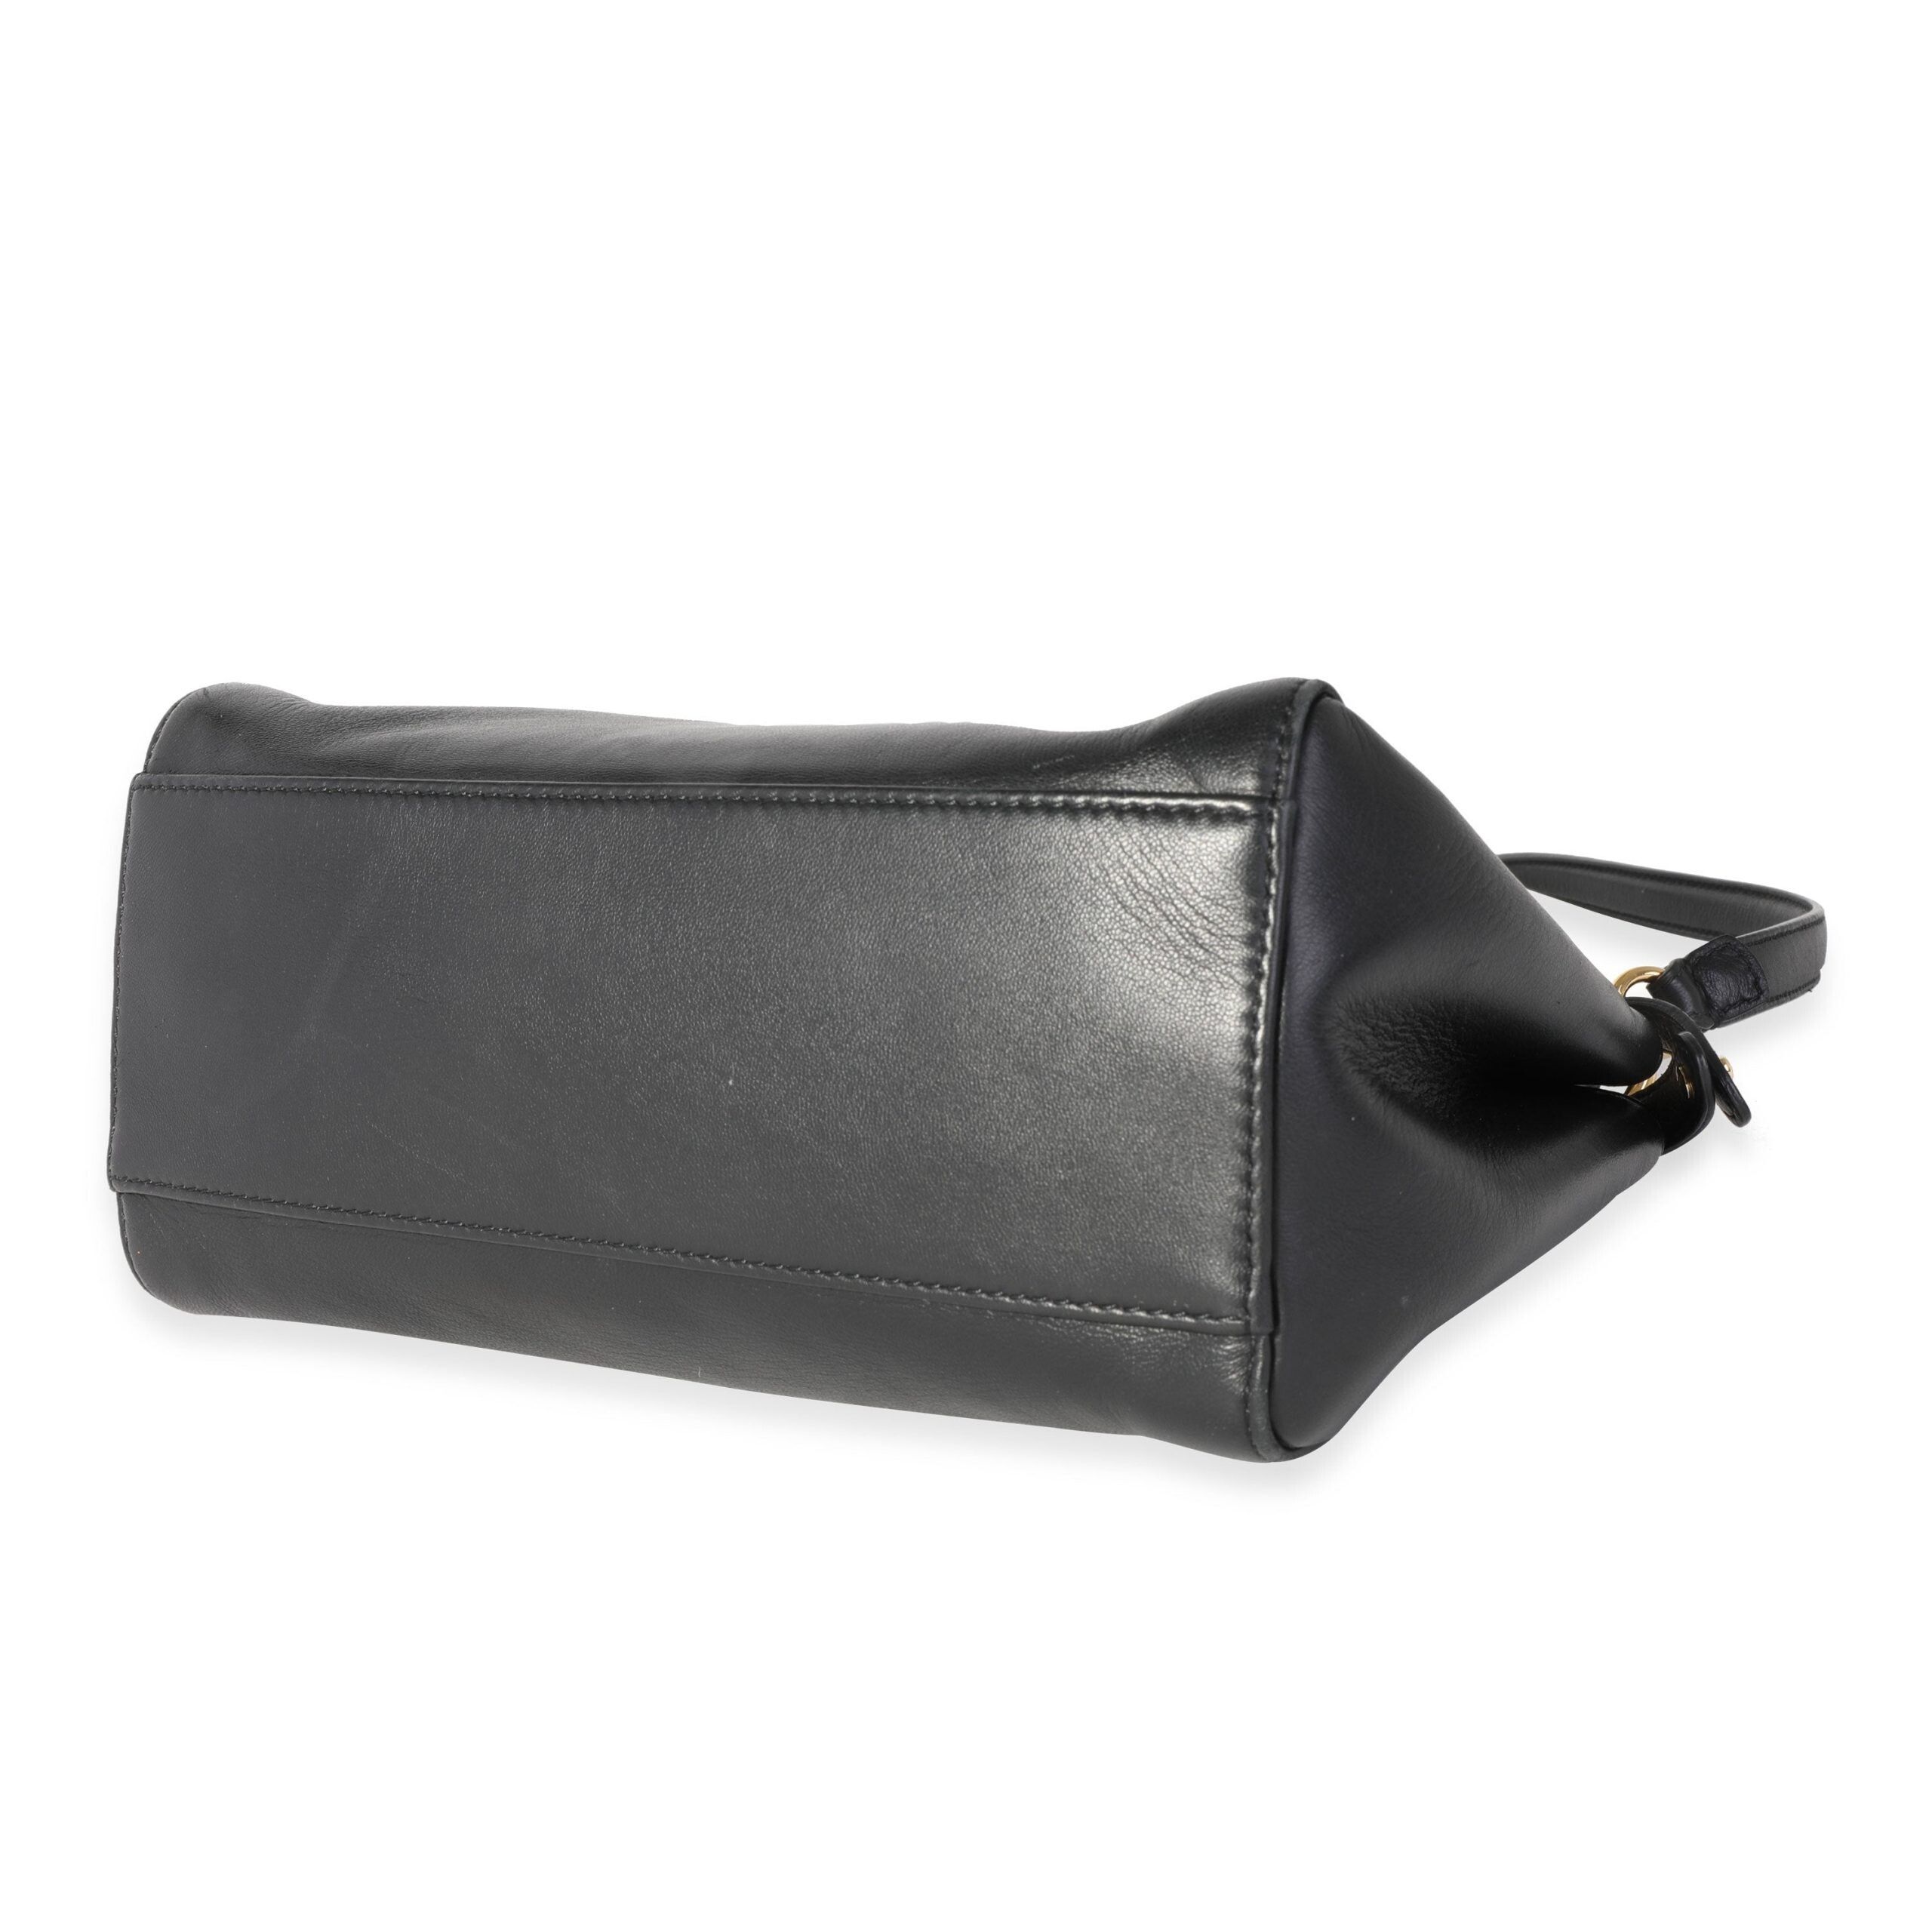 Fendi Fendi Black Nappa Leather Iconic Mini Peekaboo Bag Size ONE SIZE - 6 Thumbnail